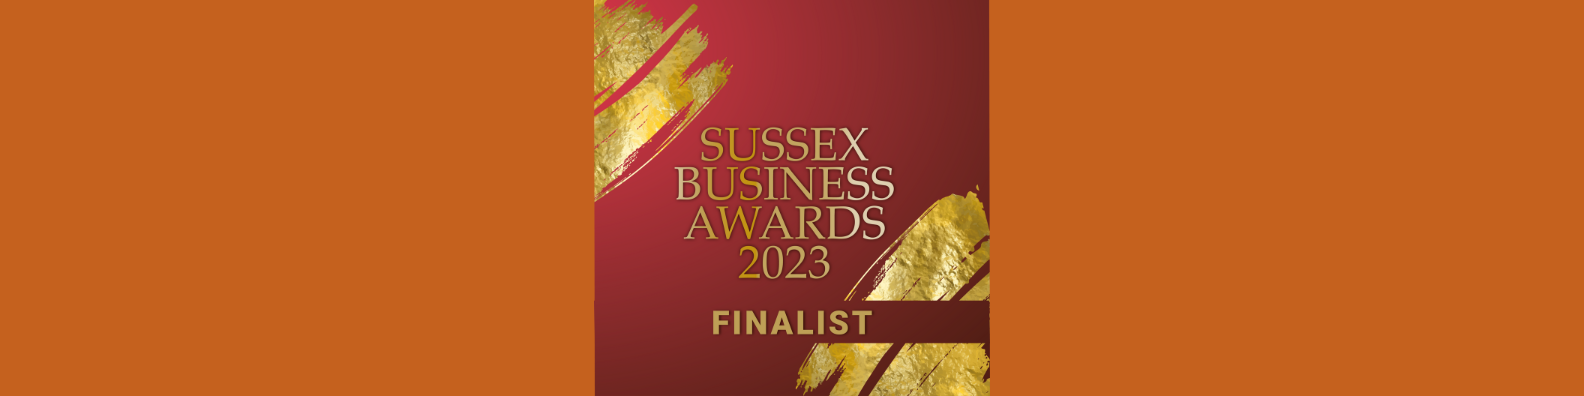 Sussex Business Awards logo